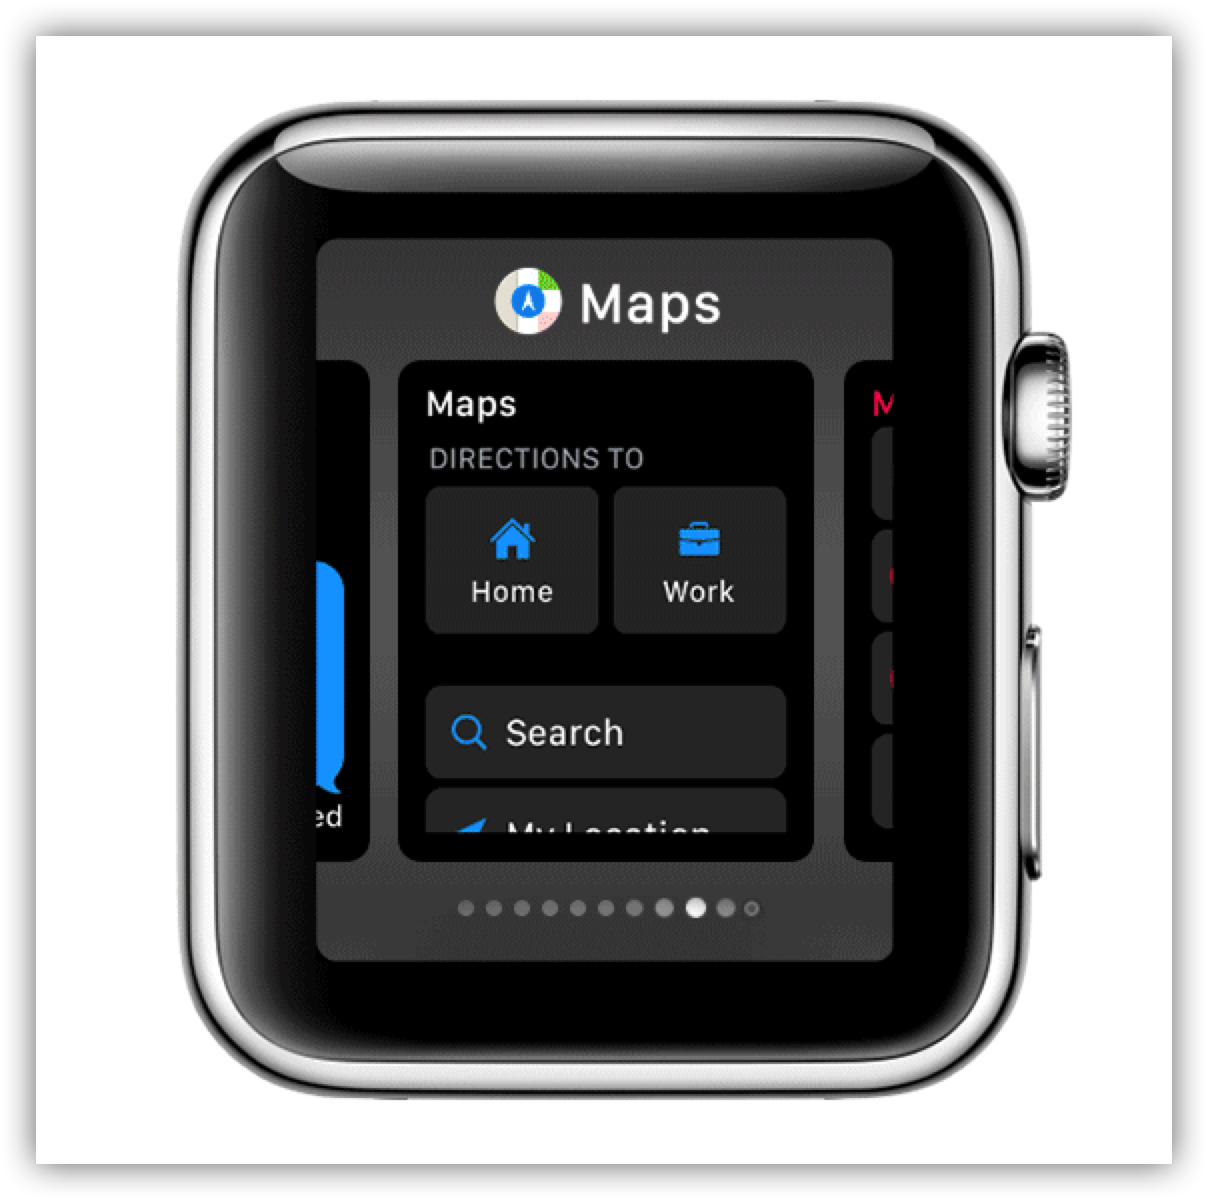 [AppleWatch]Apple Watch で Dock を使って App を快適に切り替える一つの方法